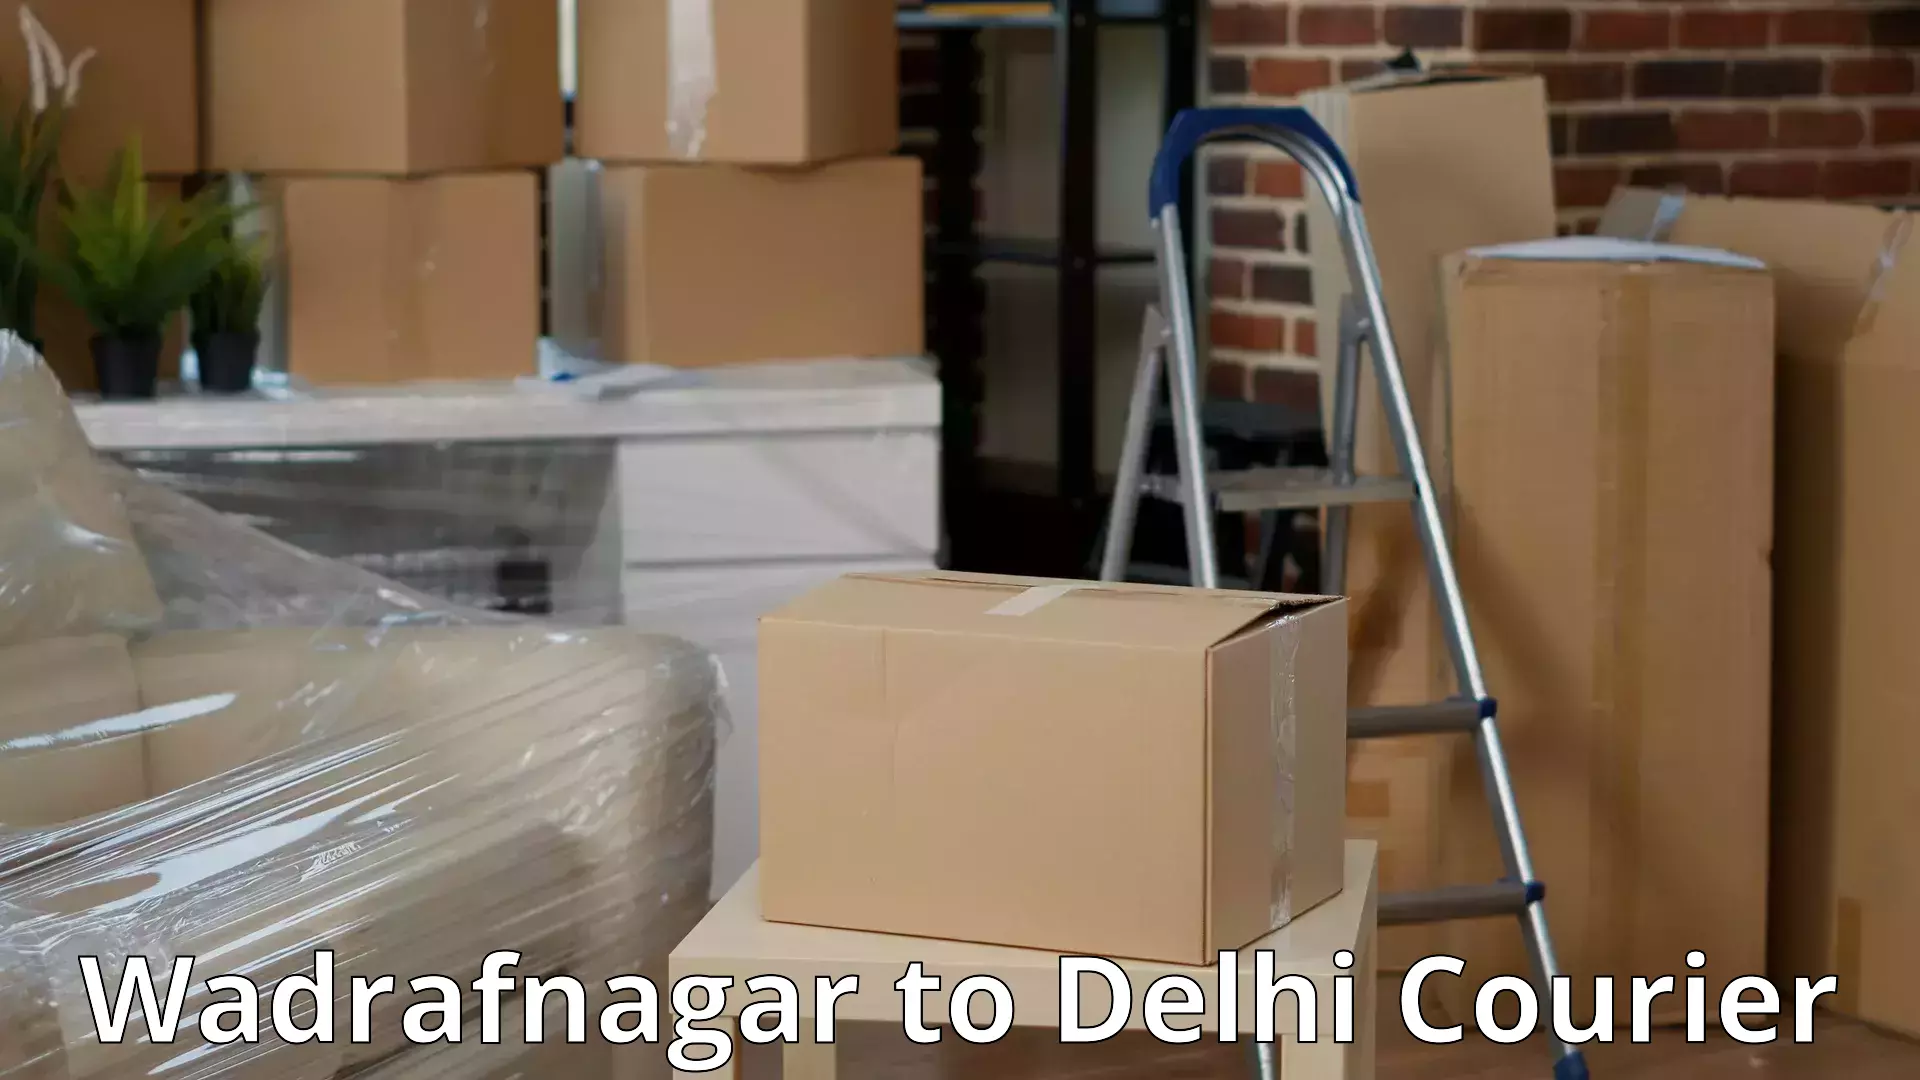 Household goods movers and packers Wadrafnagar to Ashok Vihar